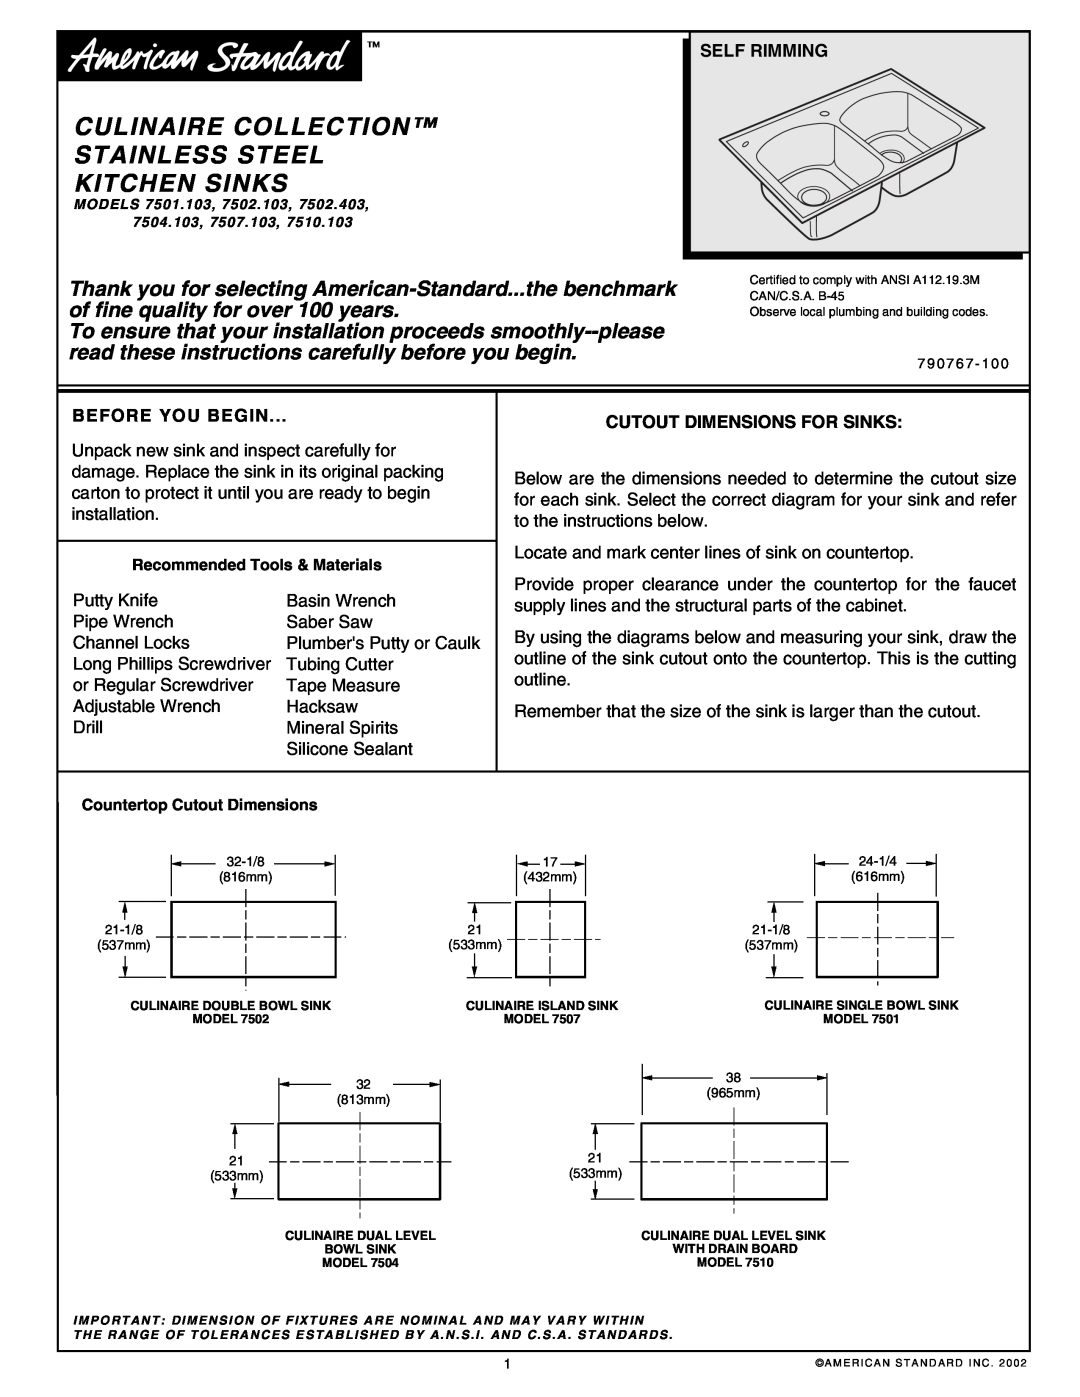 American Standard 7502.103, 7507.103, 7502.403 dimensions Self Rimming, Before You Begin, Cutout Dimensions For Sinks 